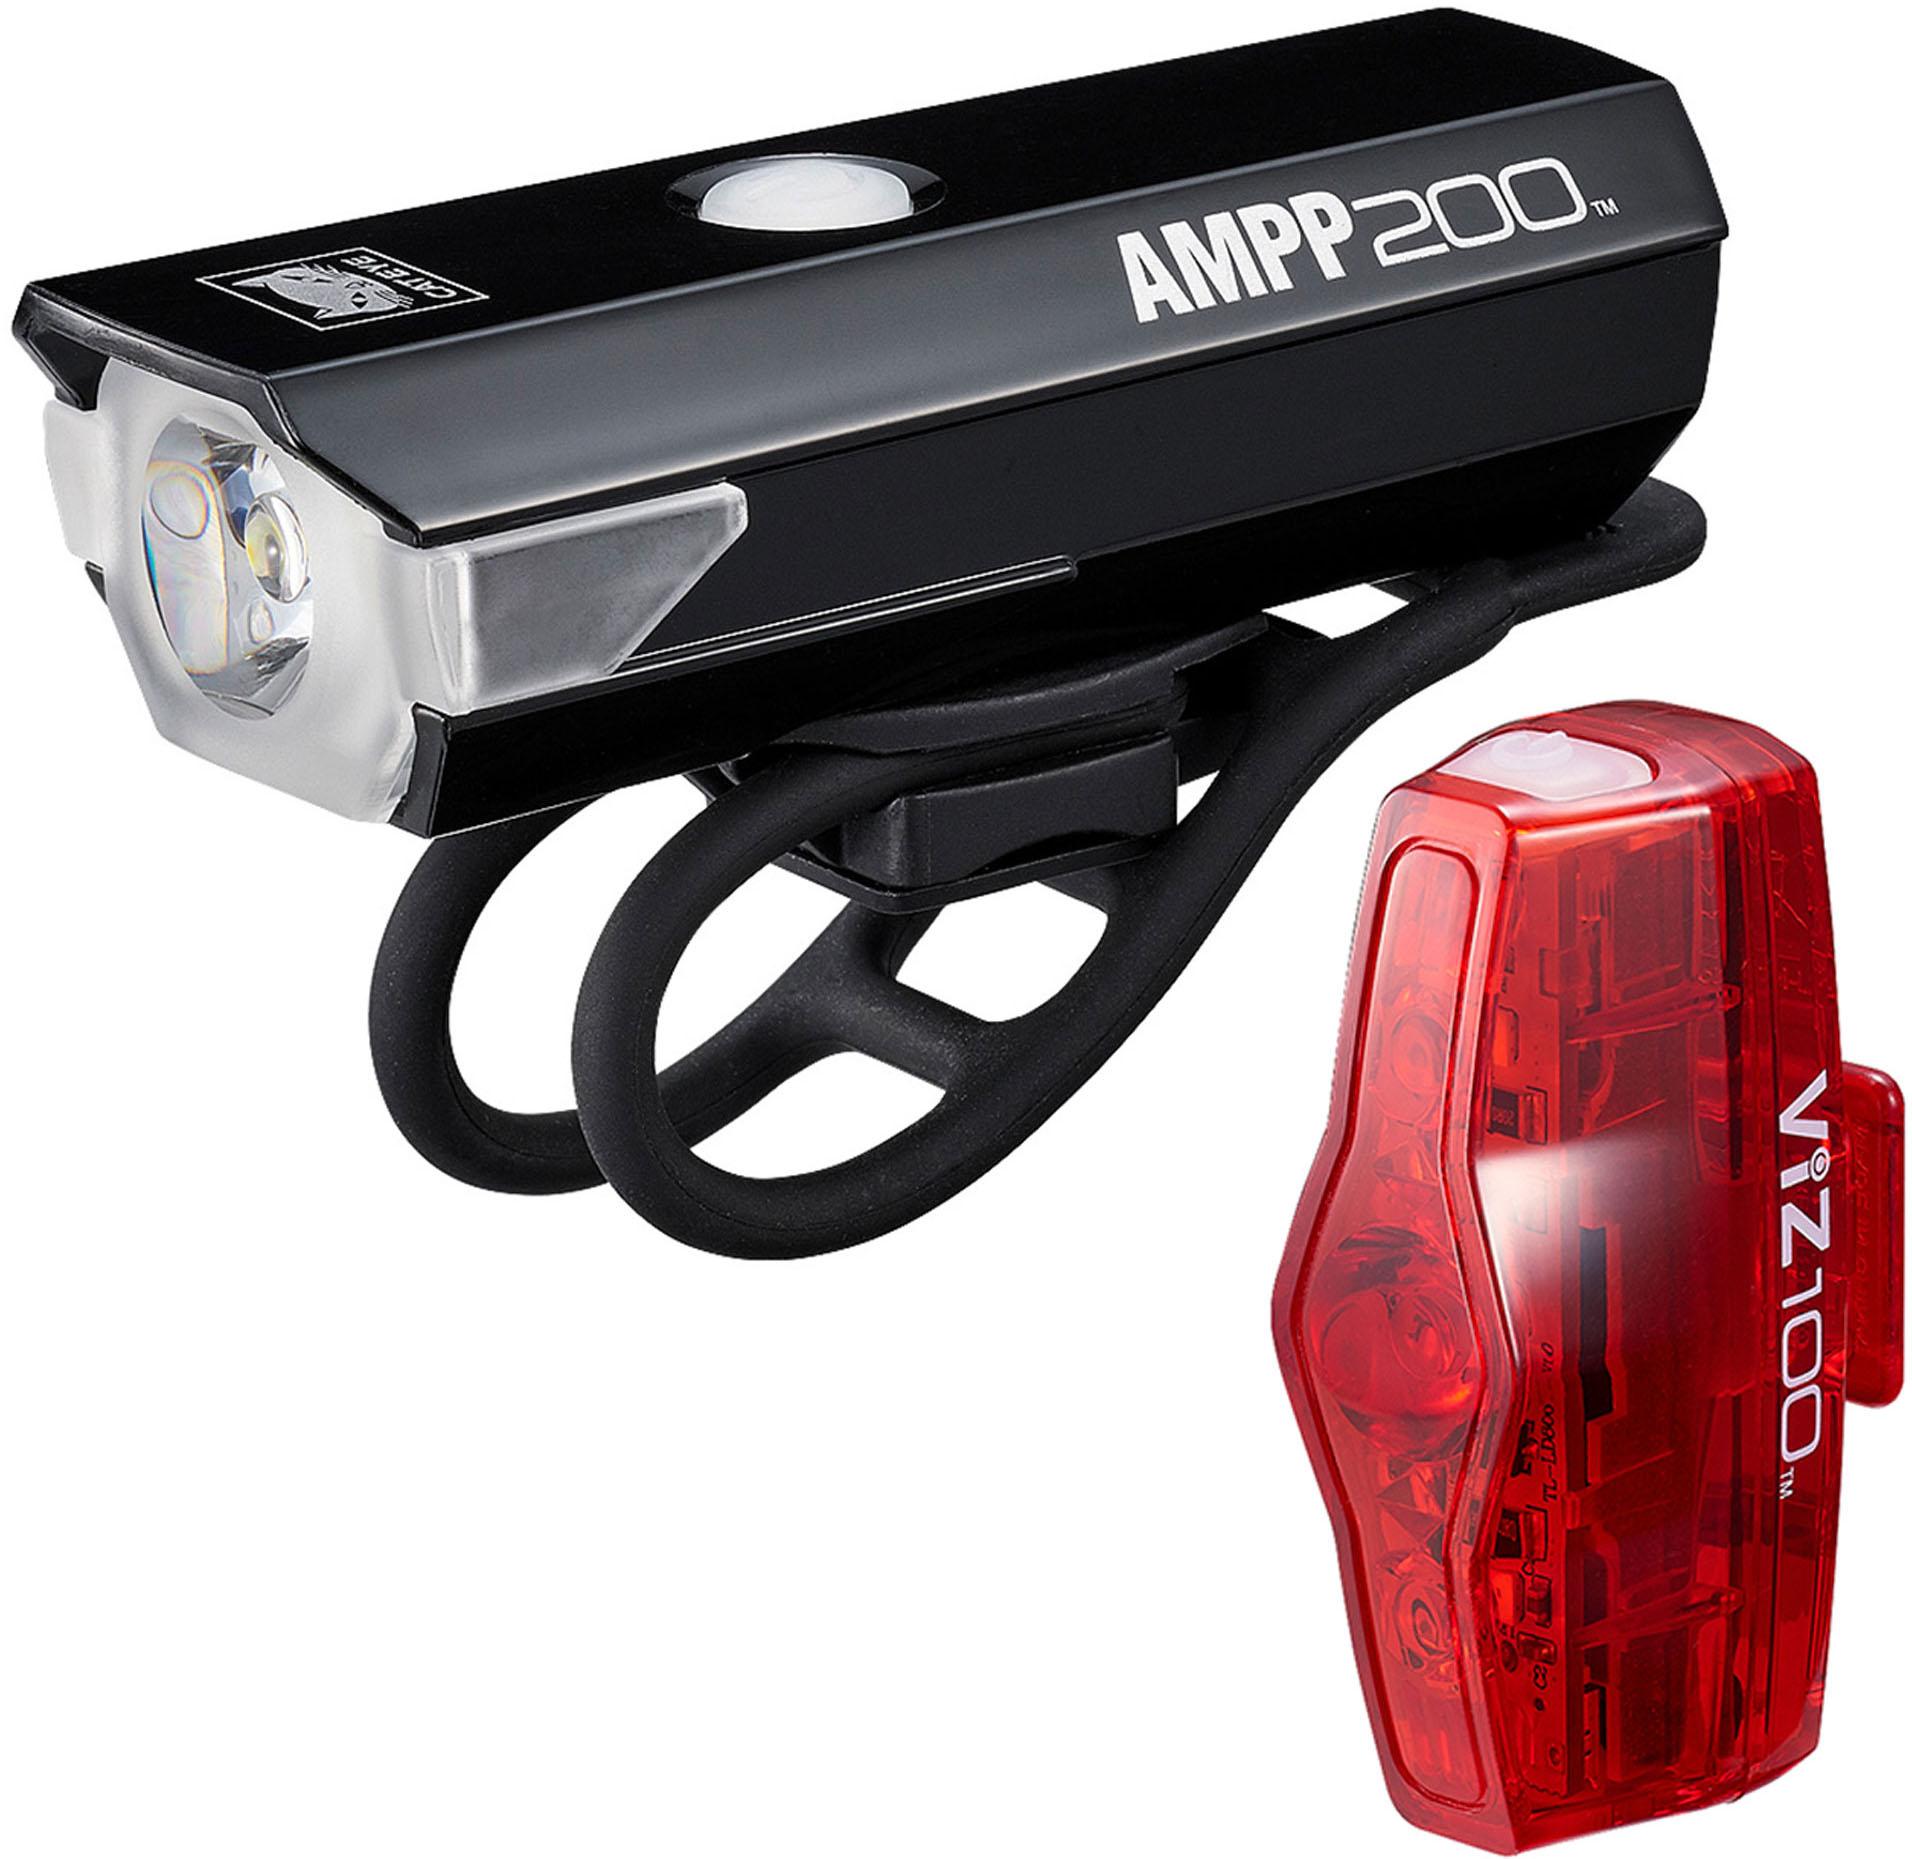 Cateye Ampp 200 And Viz 100 Light Set - Black/red